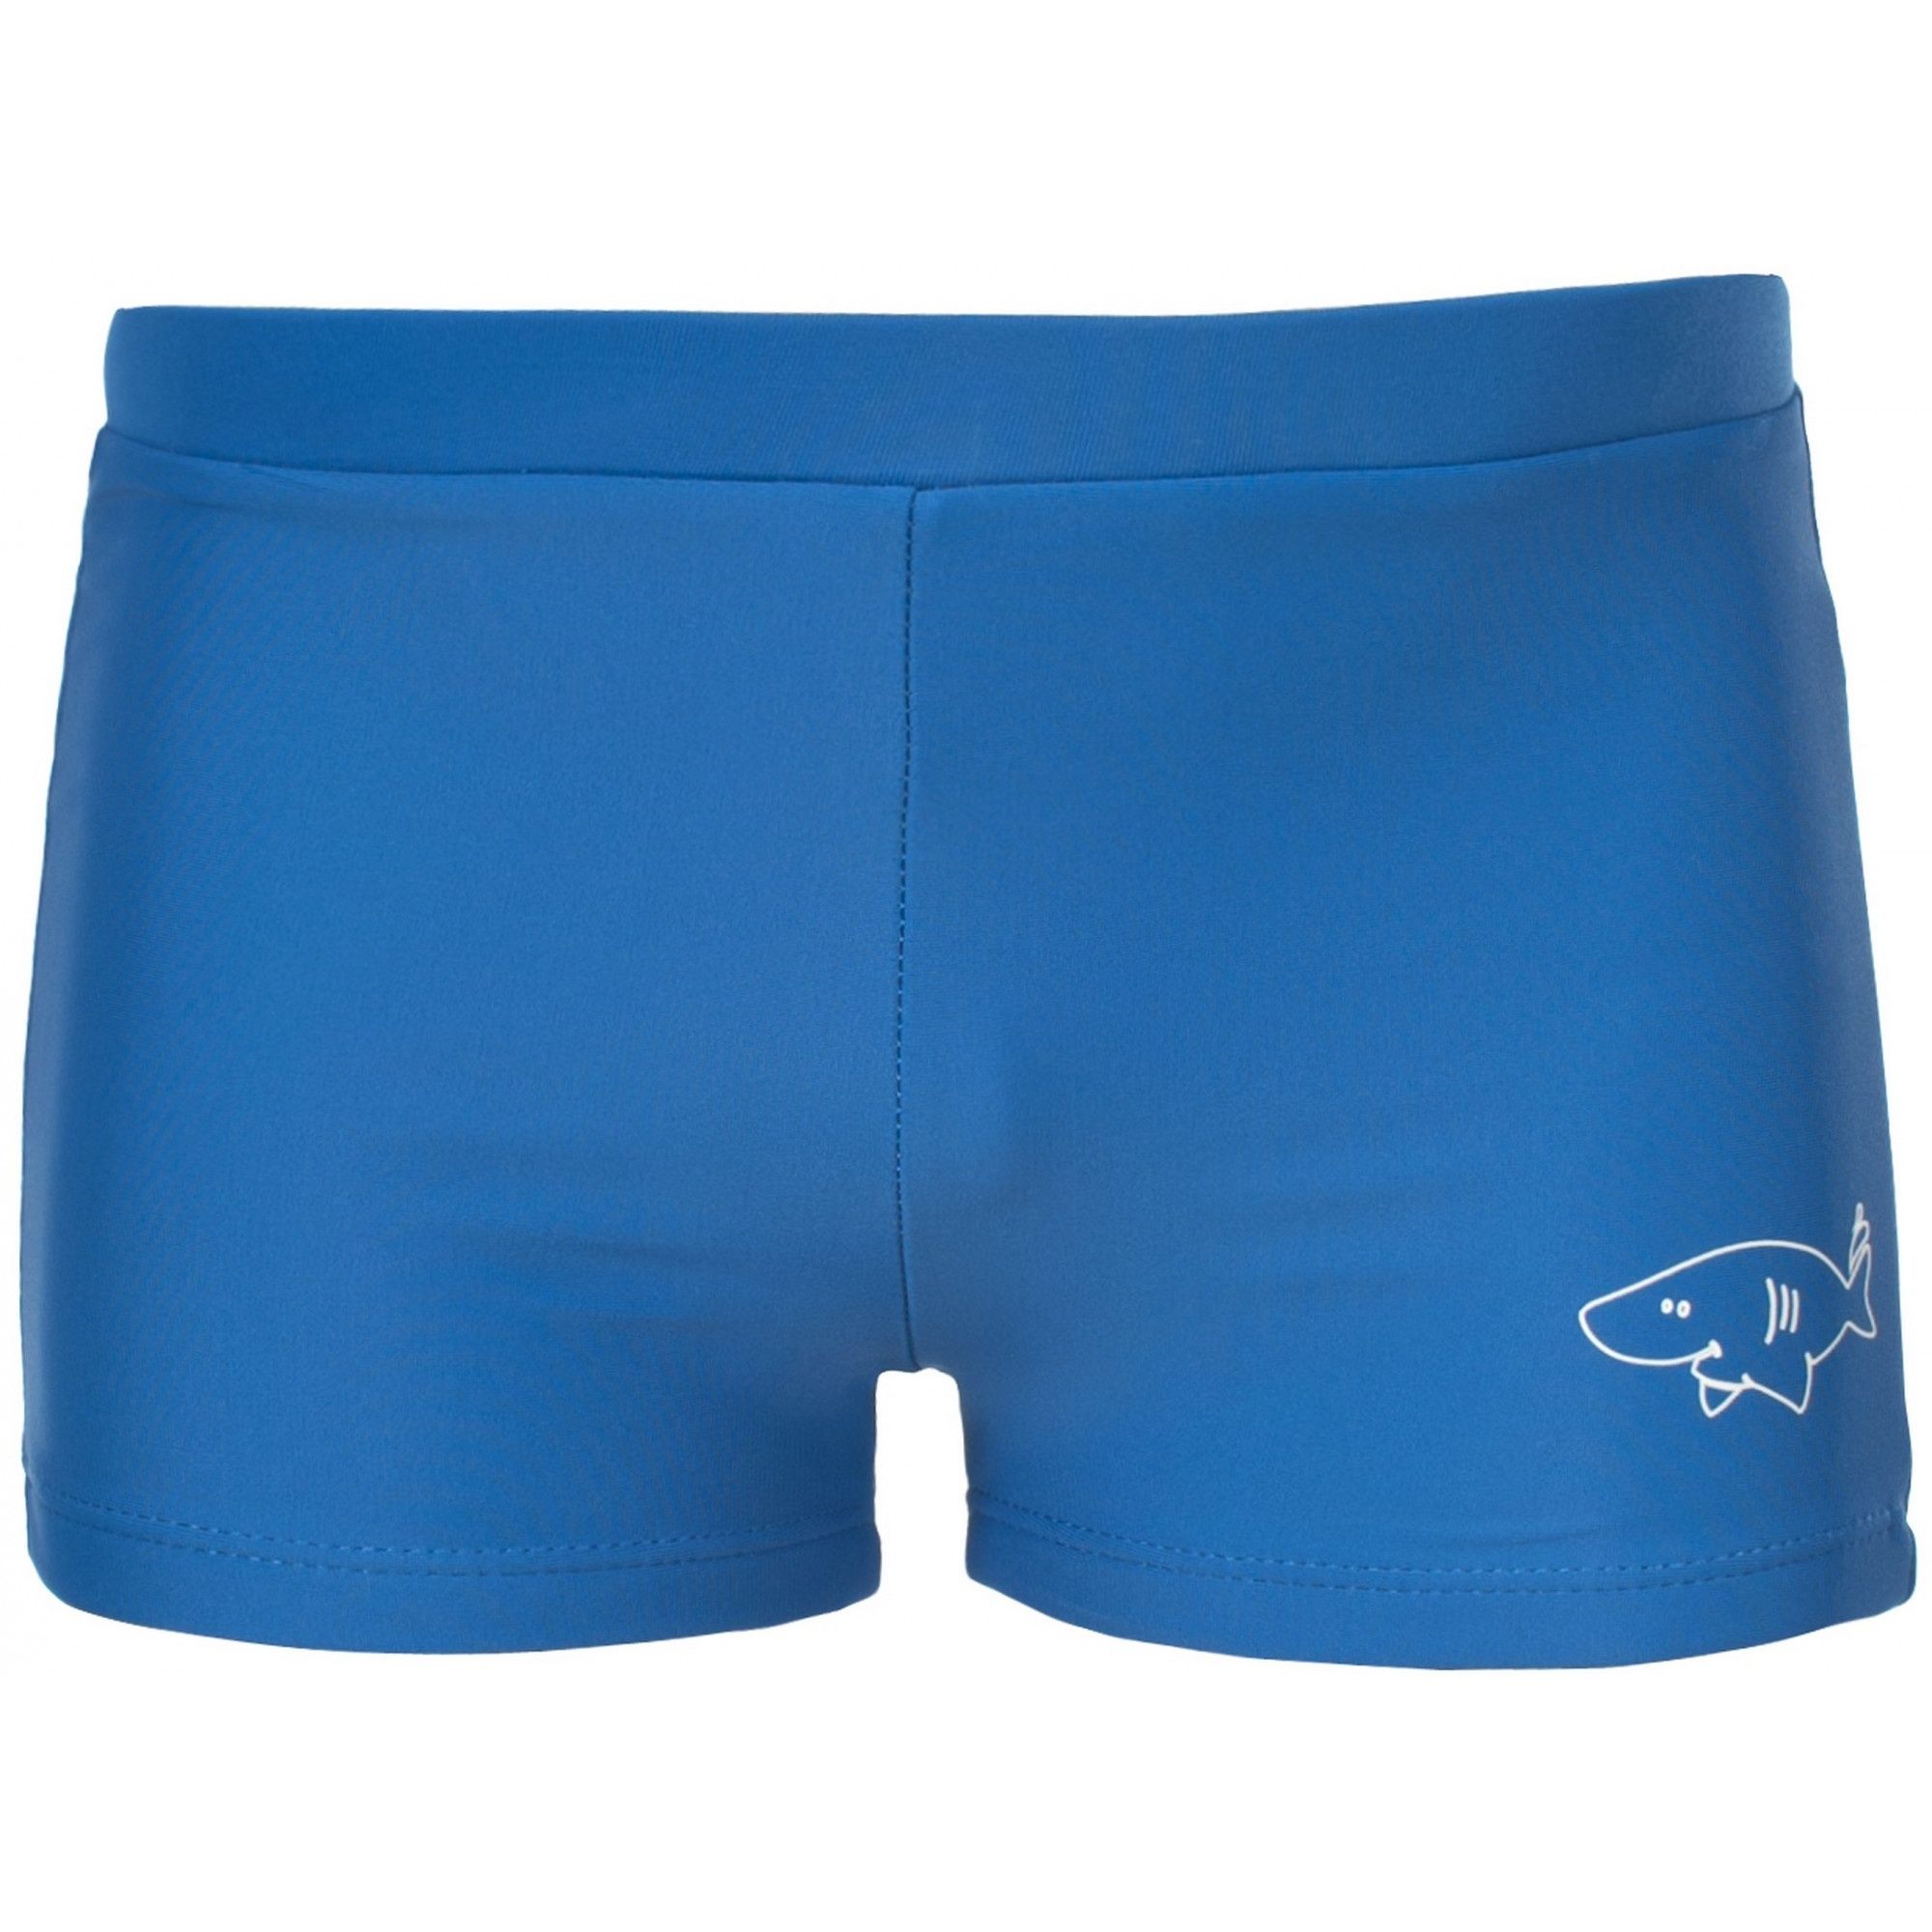 Boys comfortable fit swim shorts. Stretch fit. Shark print. Fabric: 80% polyamide, 20% elastane.